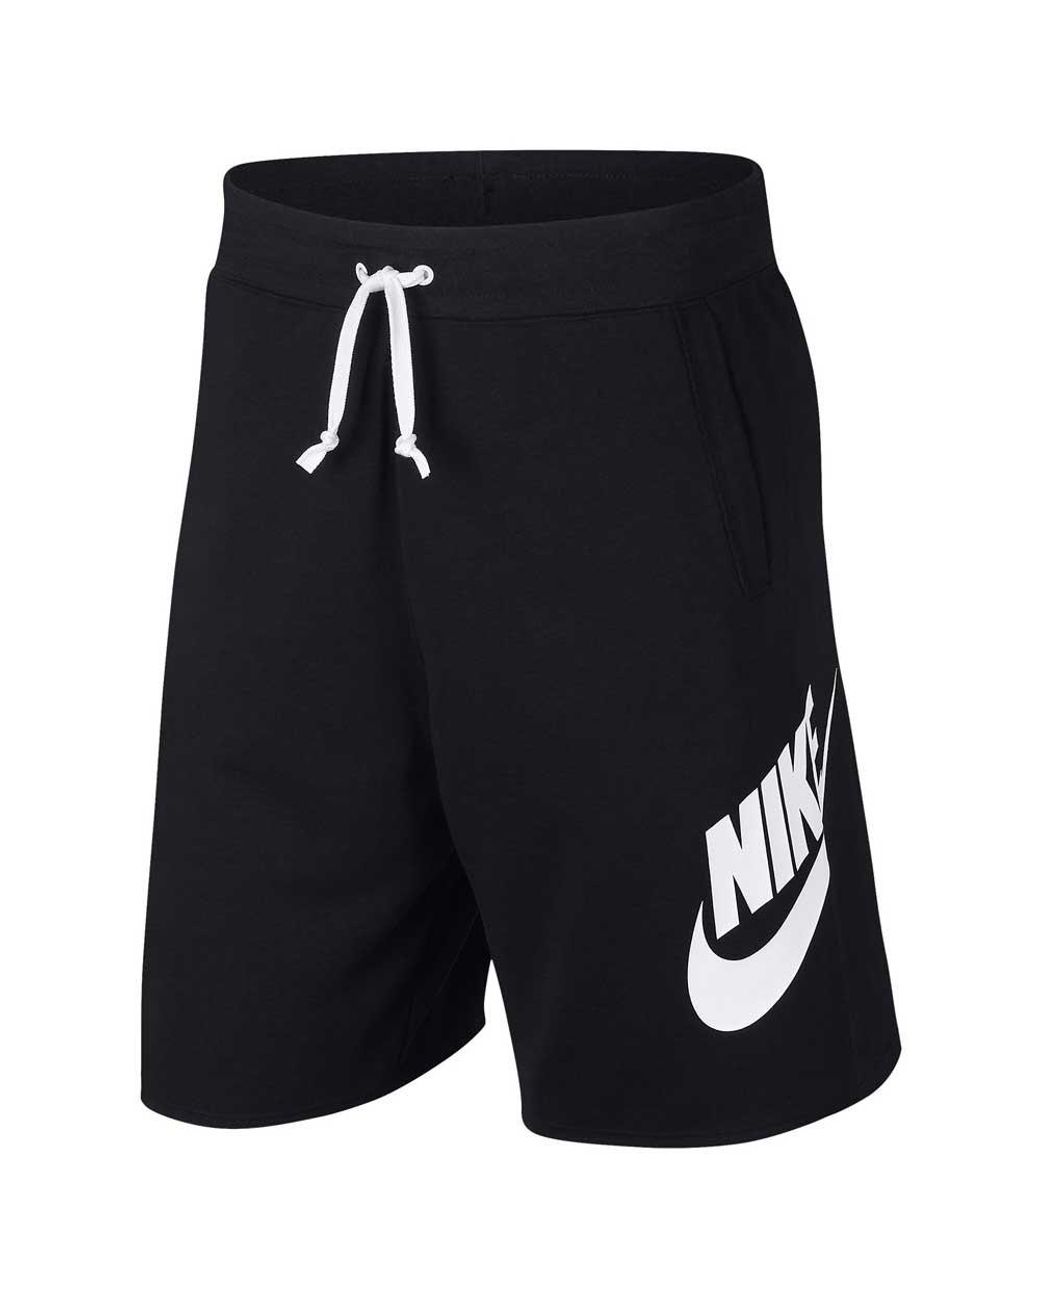 Nike Cotton Sportswear Alumni Shorts in Black / Black / White / White  (Black) for Men - Lyst